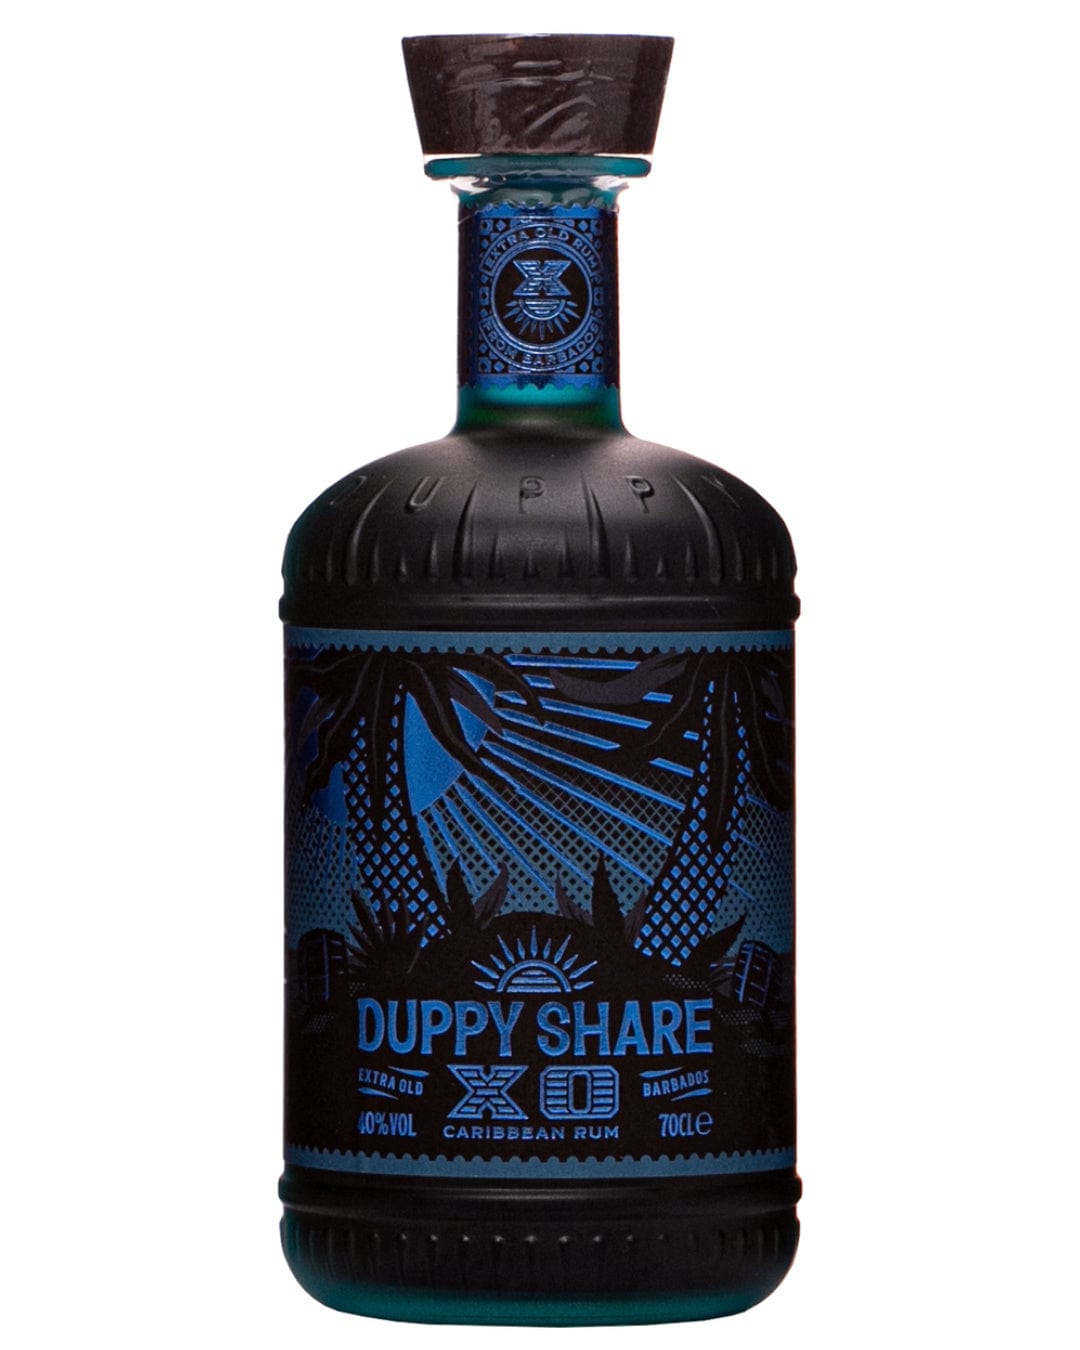 Duppy Share XO Caribbean Rum, 70 cl Rum